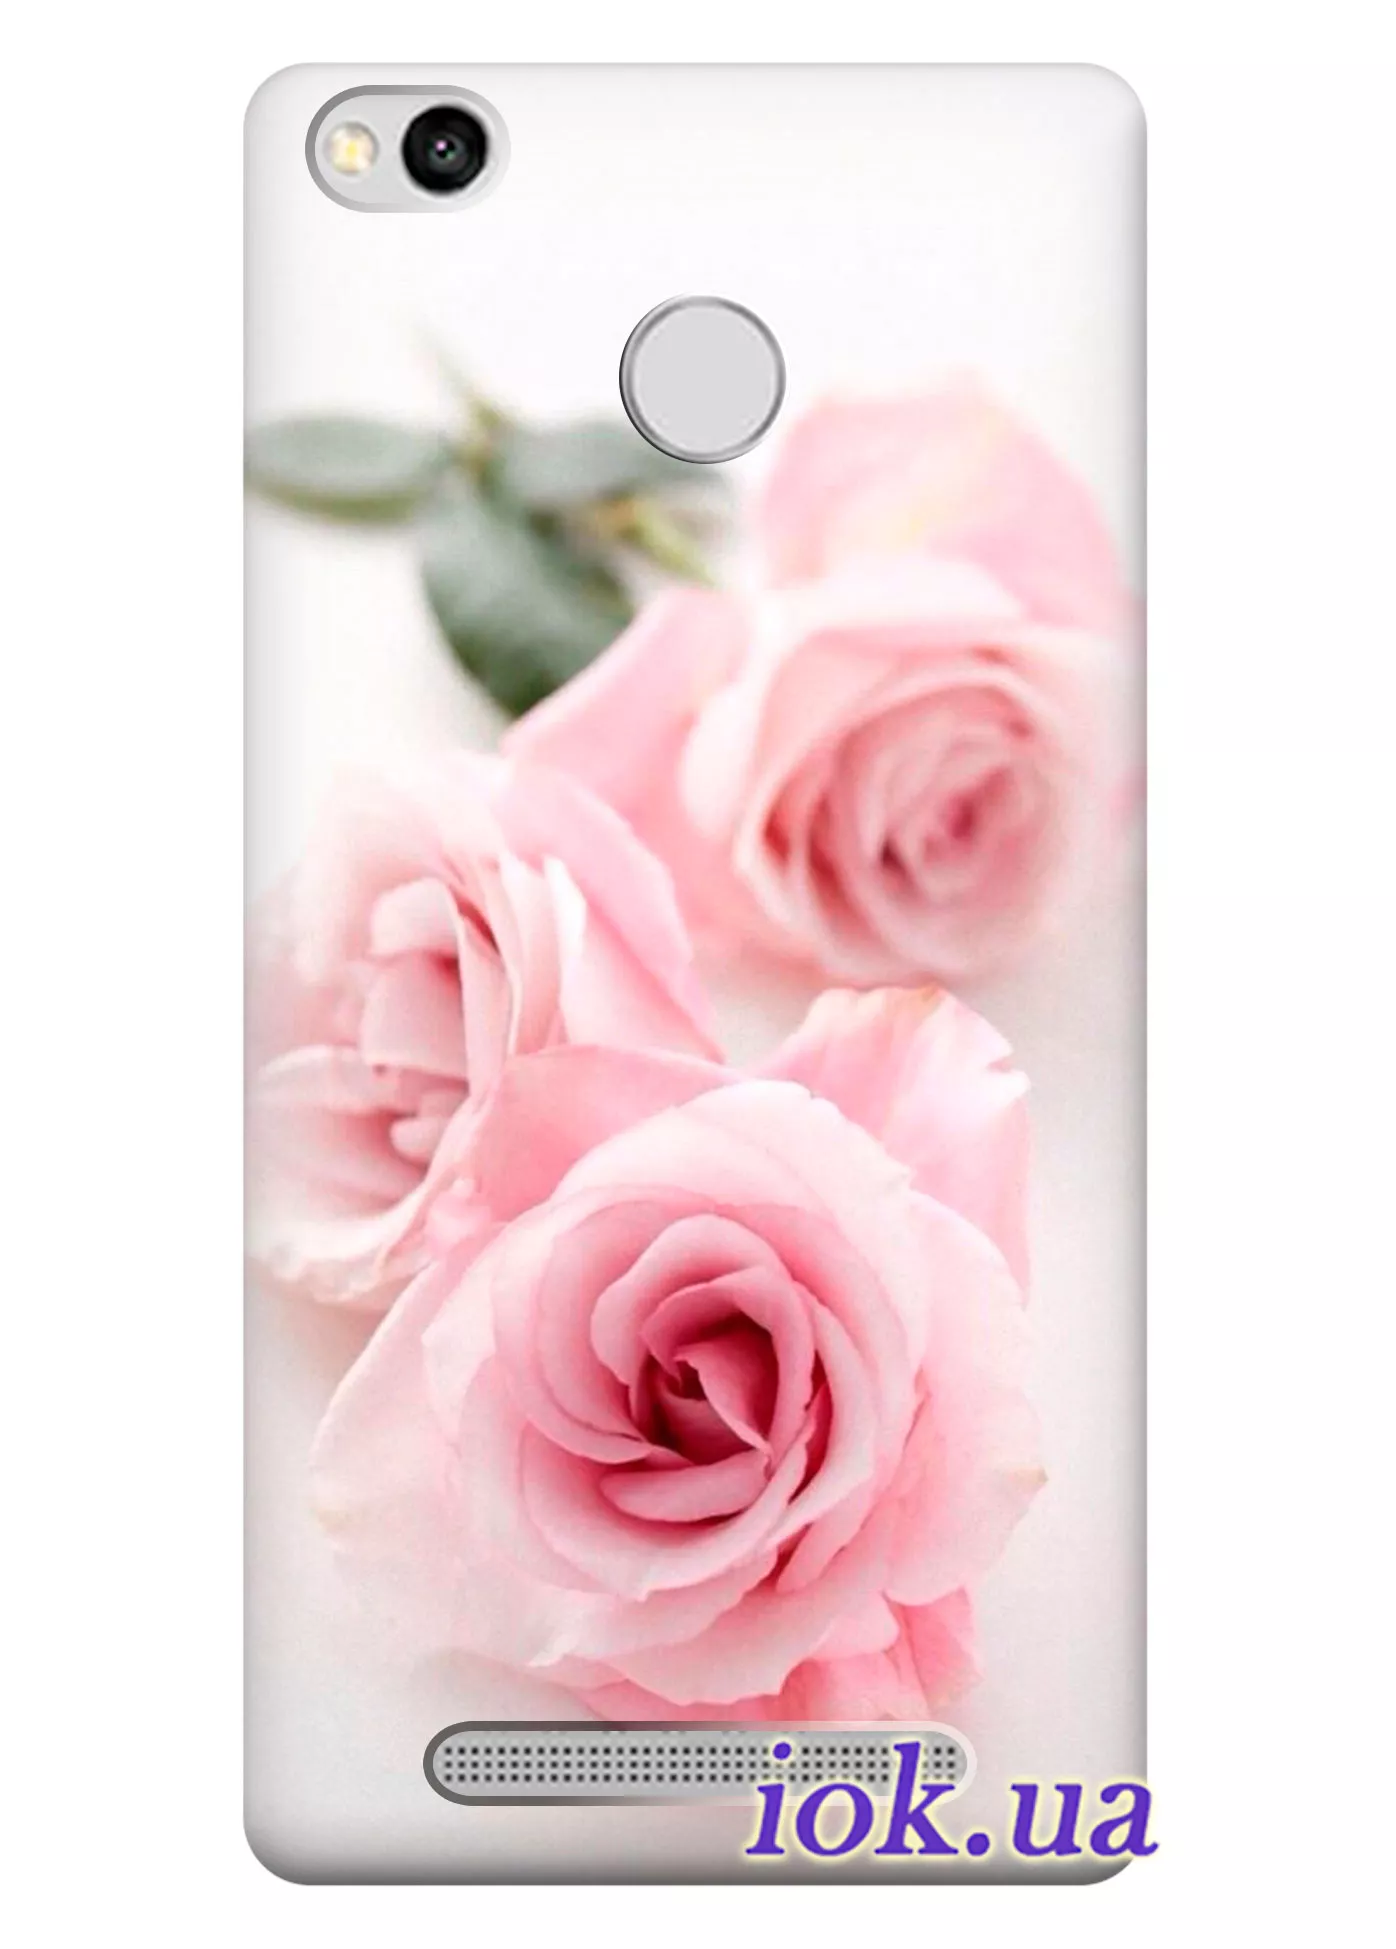 Xiaomi Redmi 3X - Розовые розы